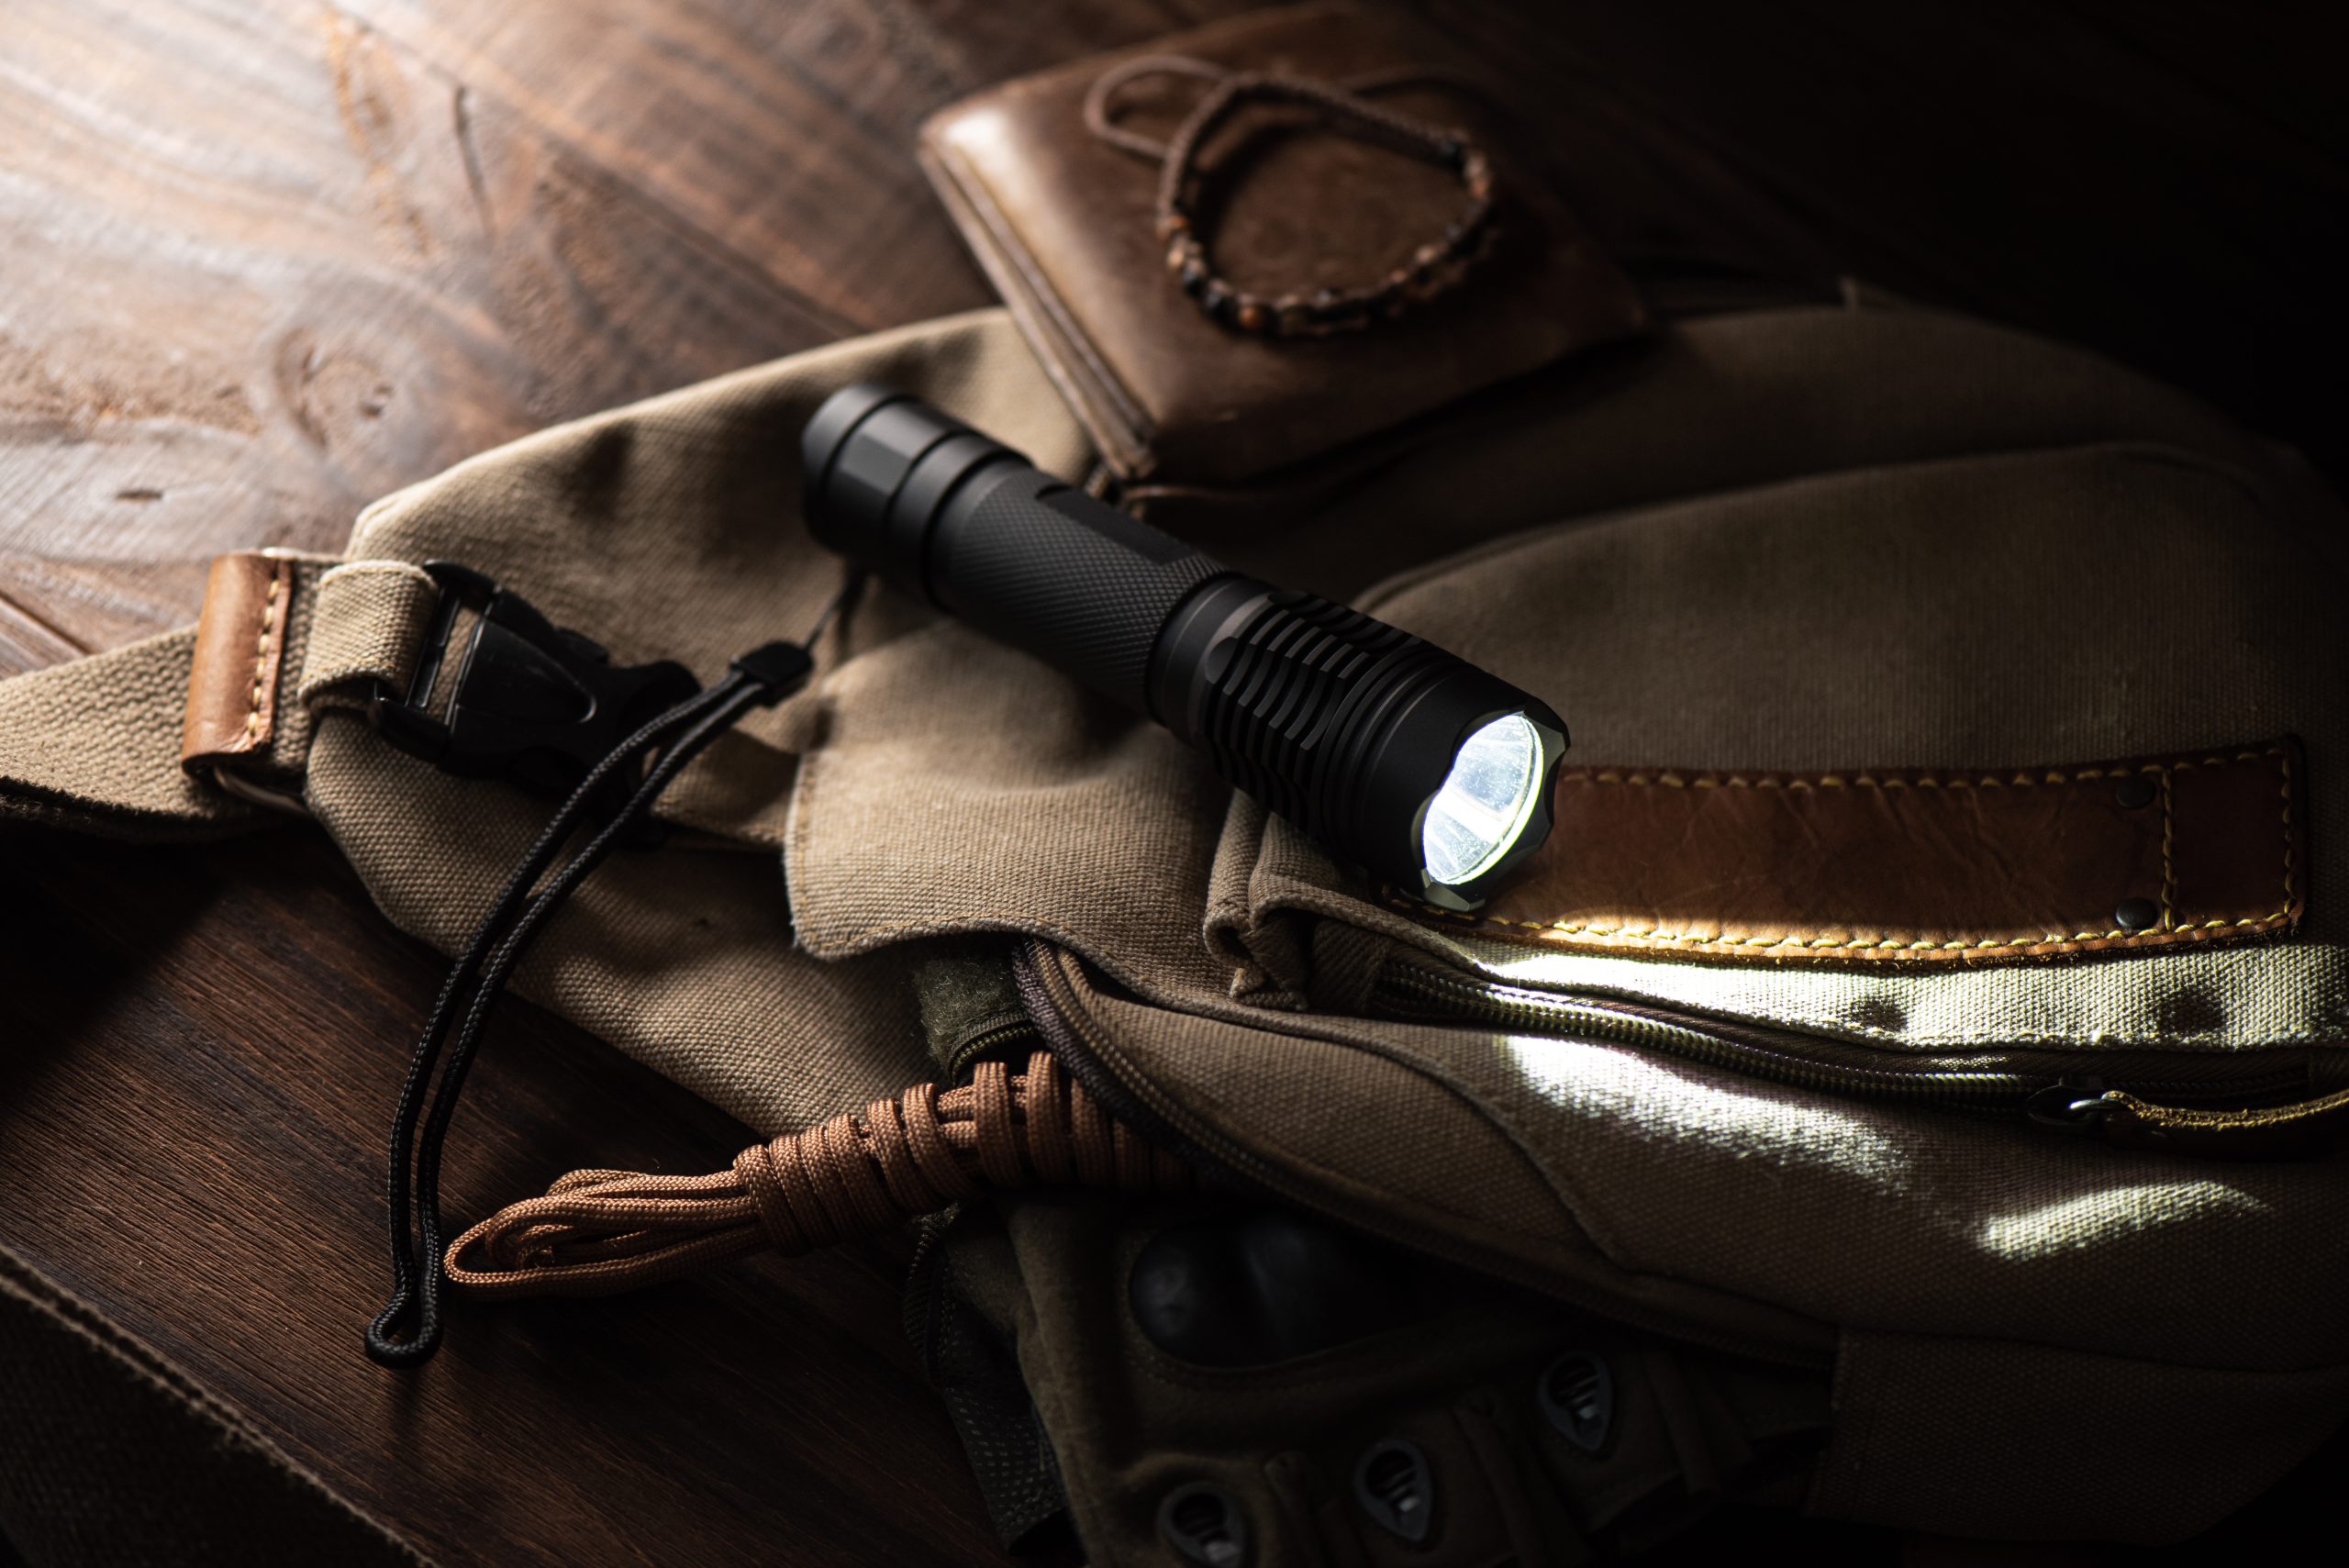 pocket flashlight for camping trip